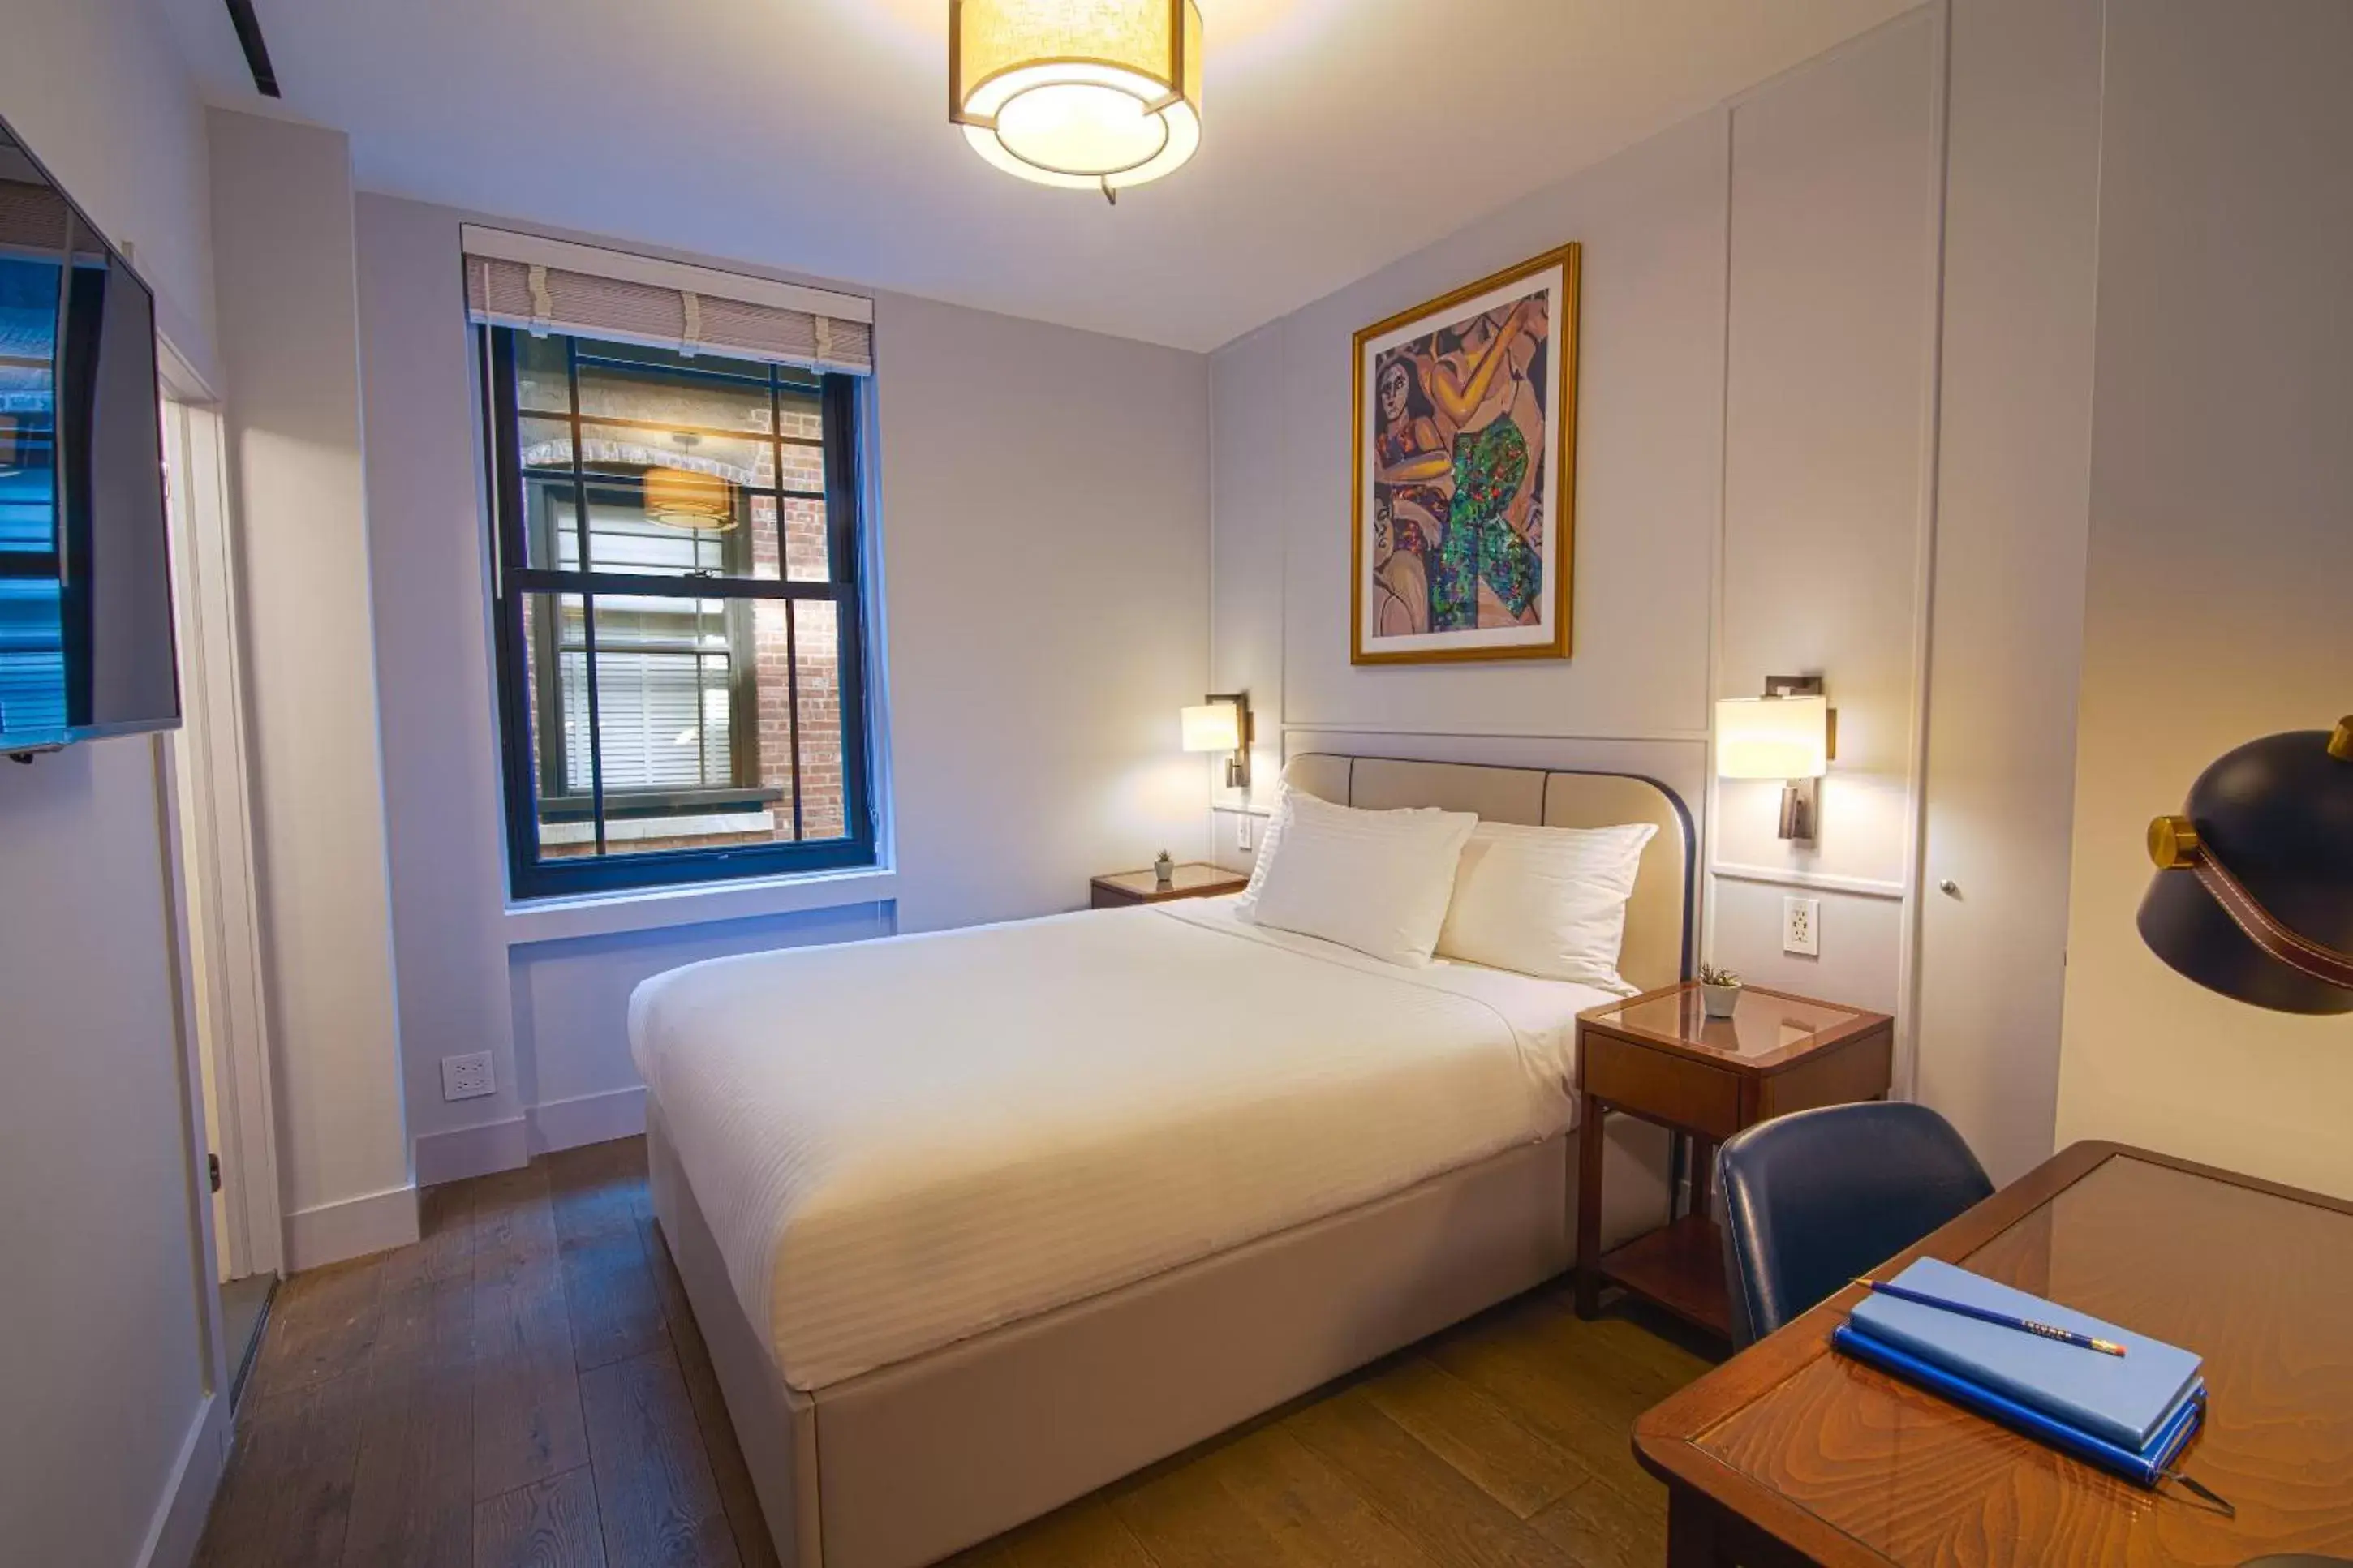 Deluxe 1 Queen Bed in Hotel Belleclaire Central Park